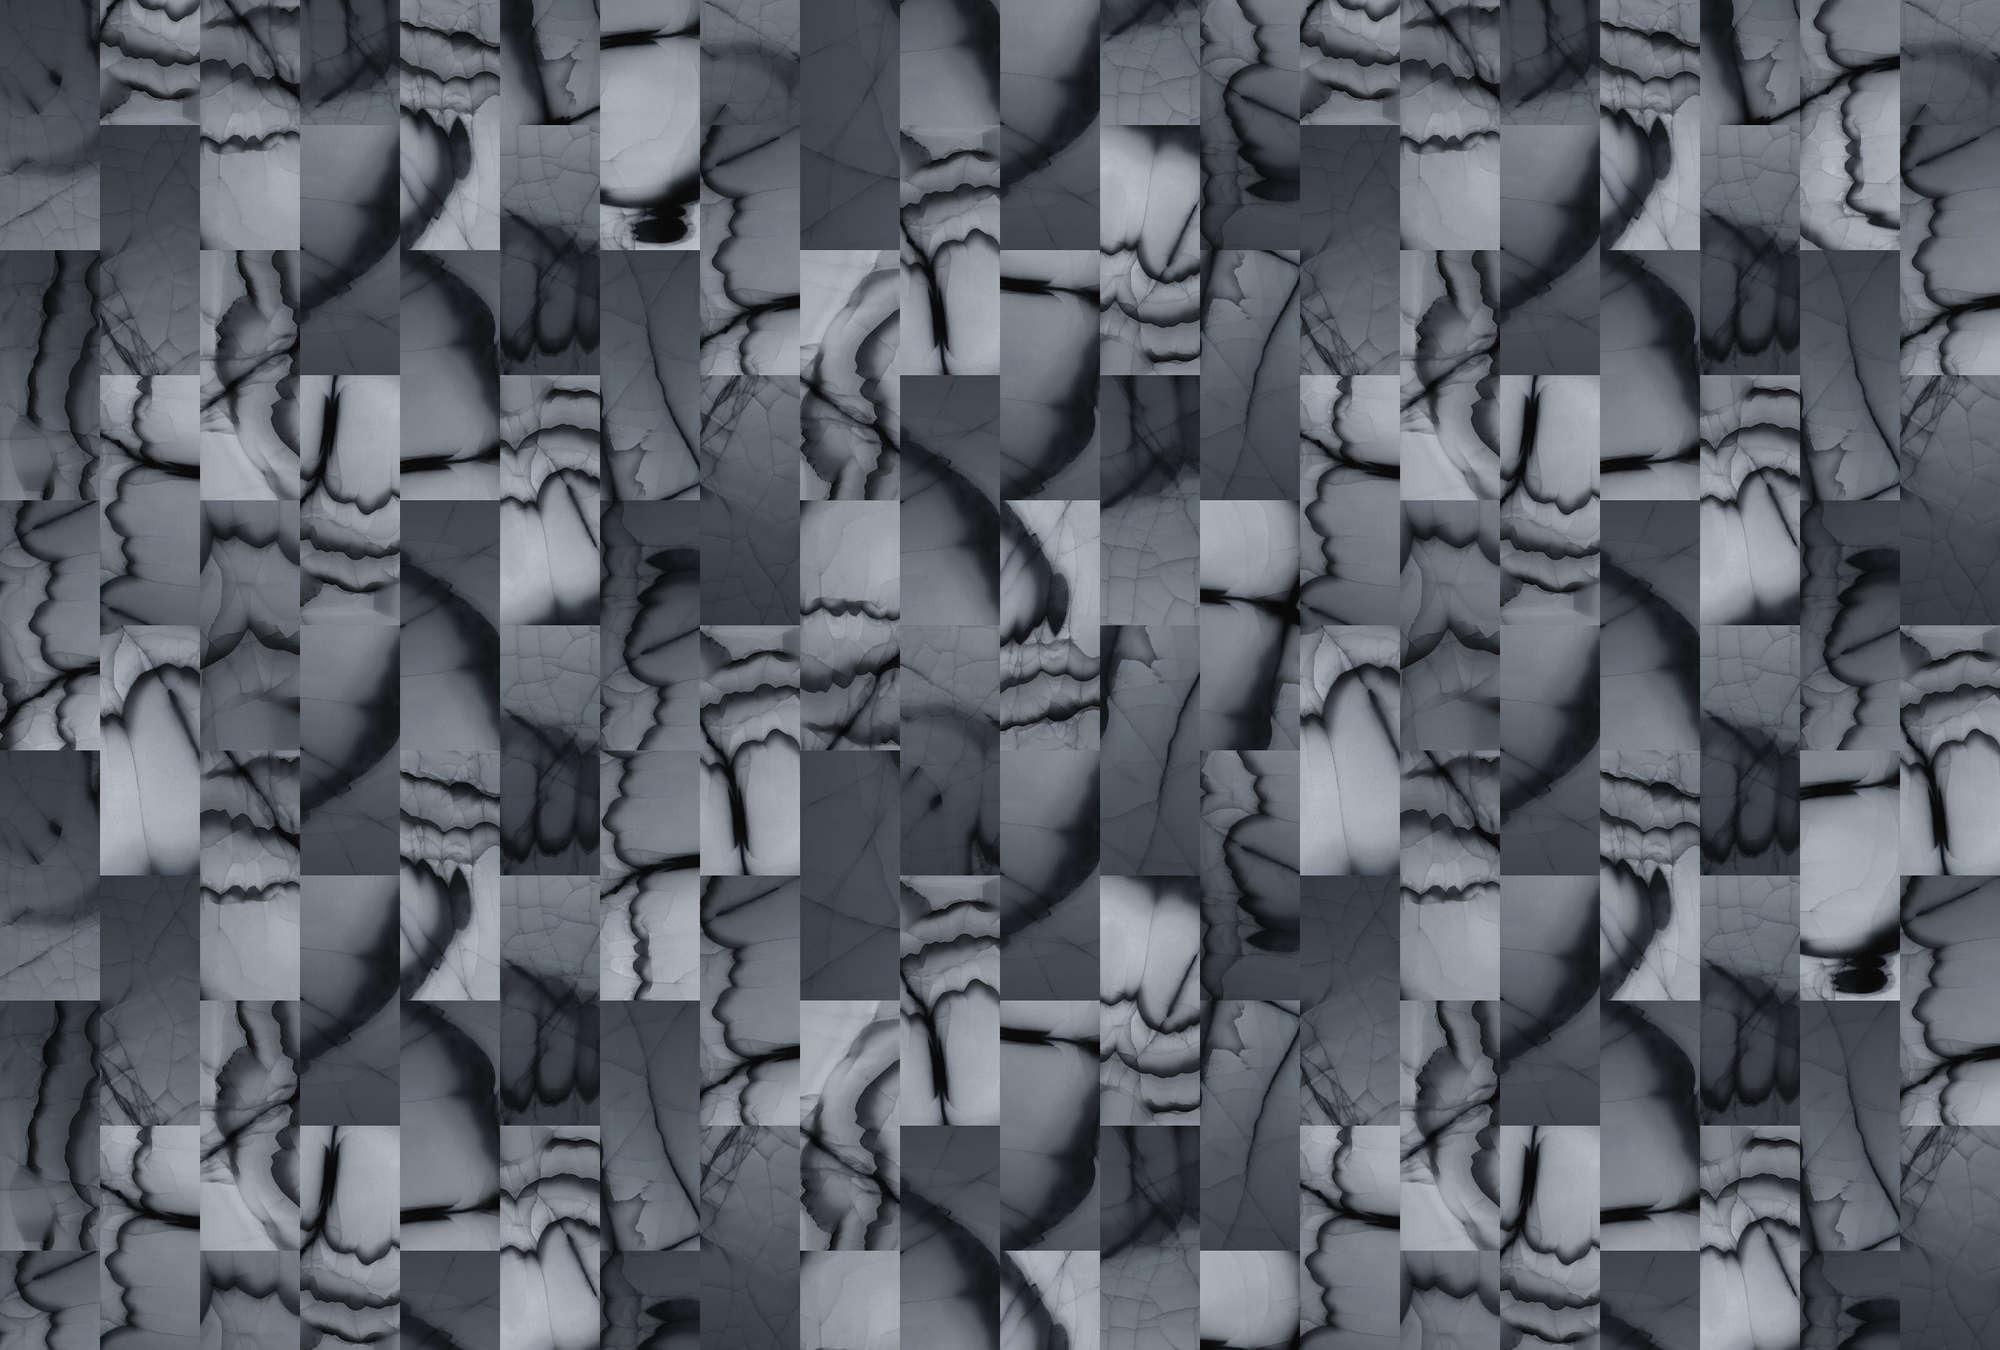             Cut stone 2 - Fototapete mit Steinoptik abstrakt – Blau, Grau | Mattes Glattvlies
        